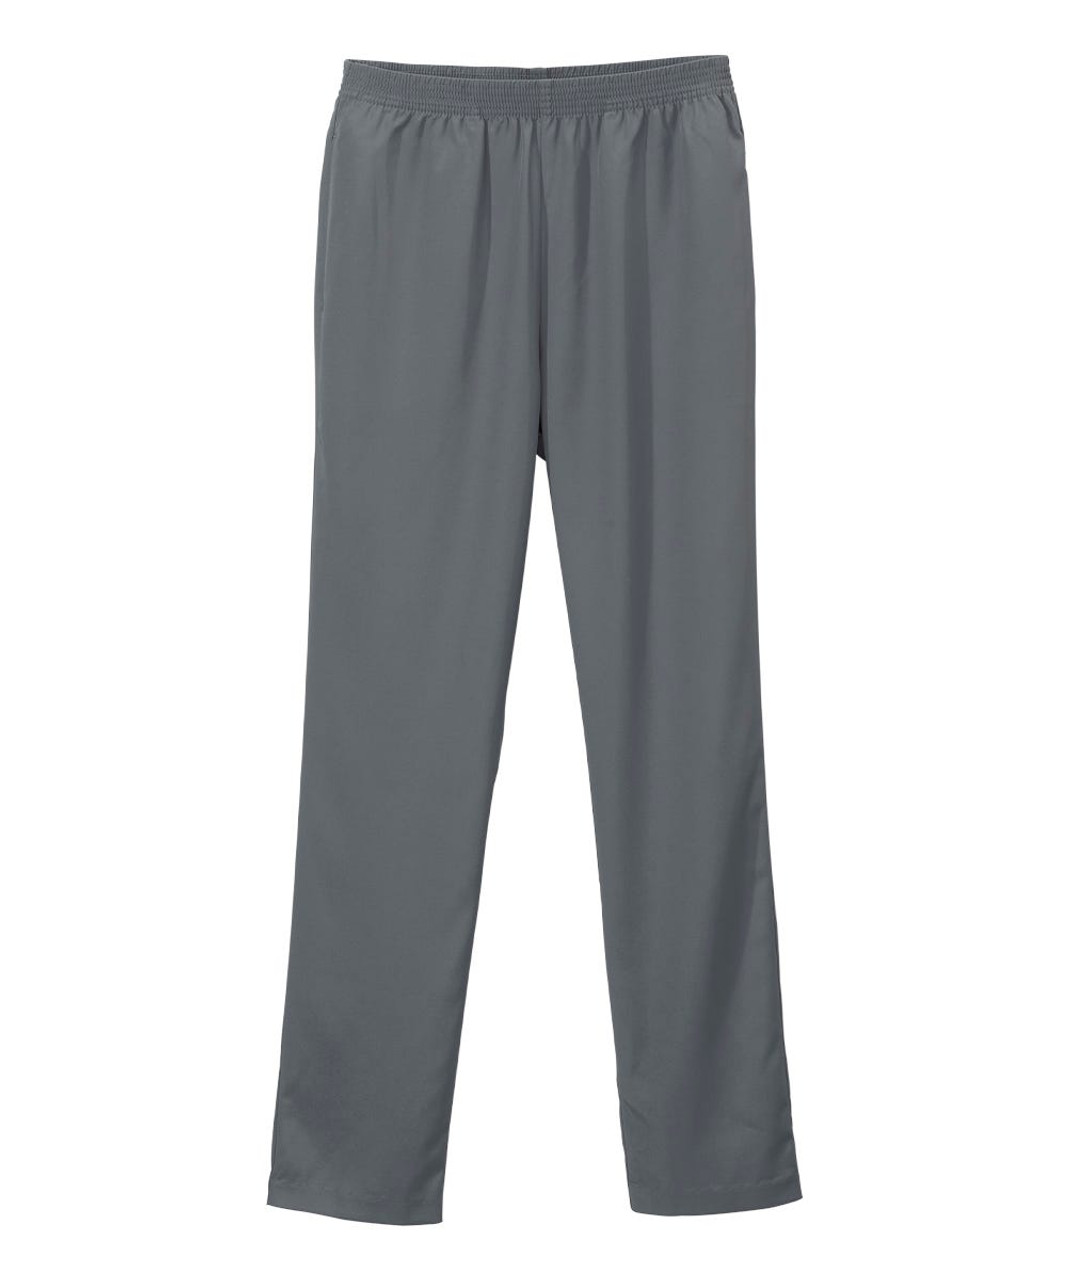 Silverts SV13090 Senior Women's Pull-on Gabardine Pant - Elastic Waist Pants for Women Condor Grey, Size=18, SV13090-CGW-18